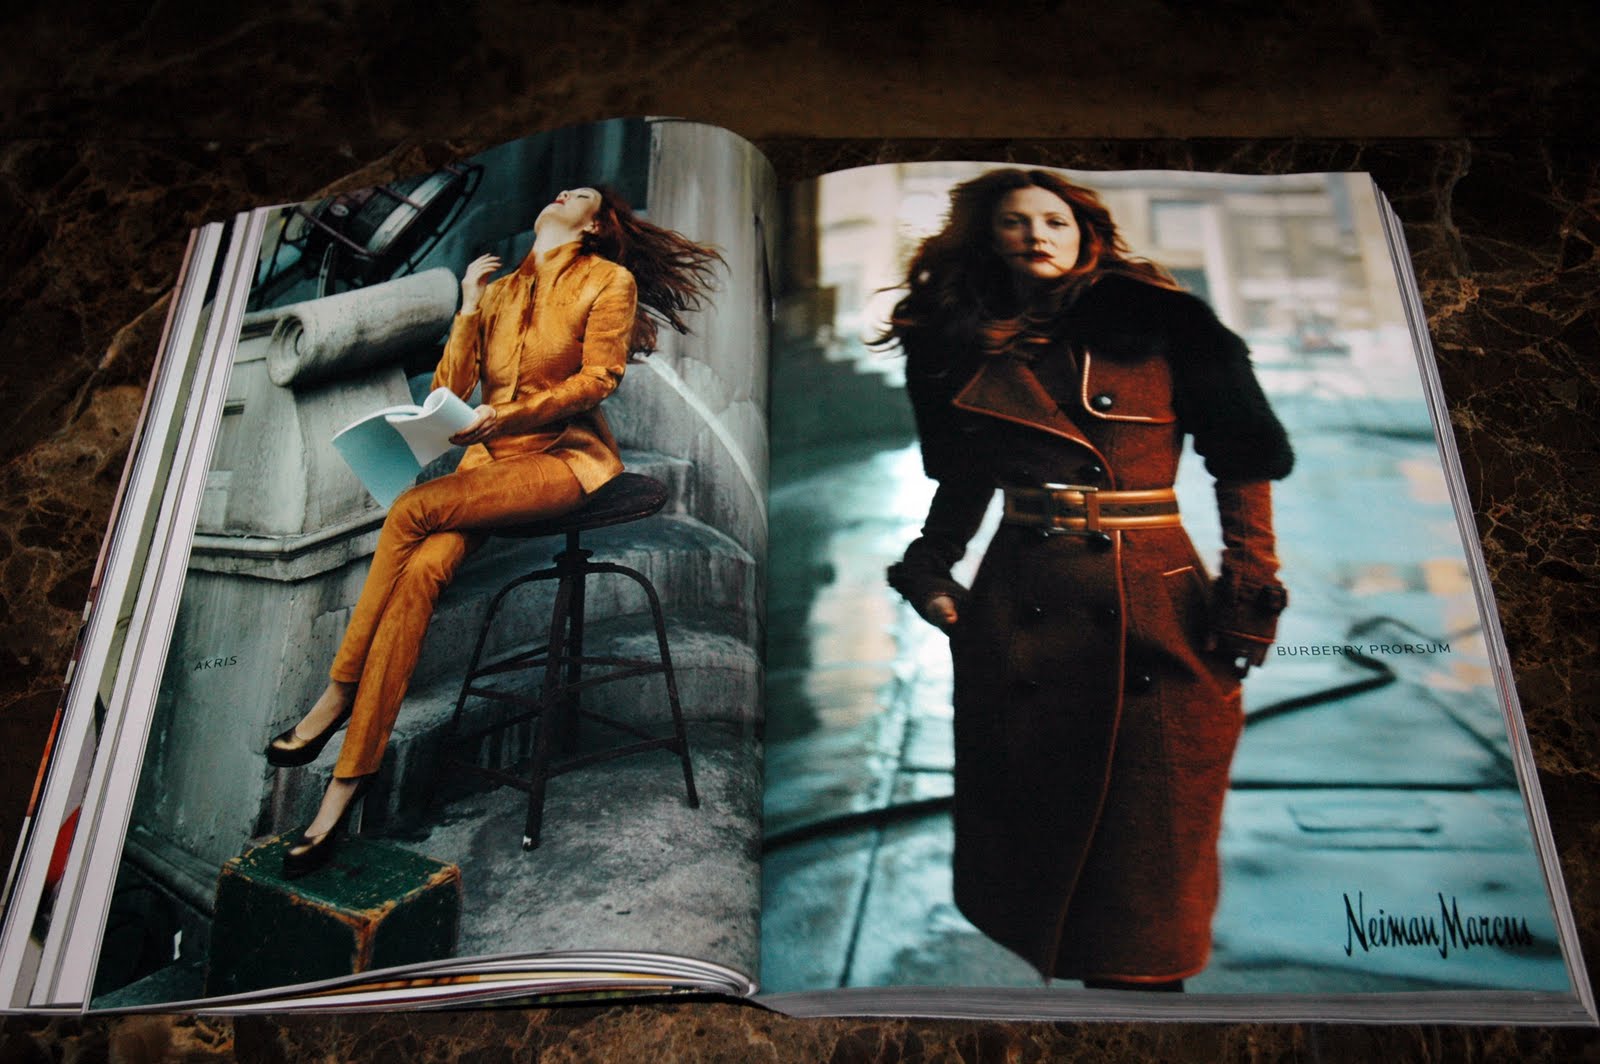 Myer Emporium Fashion Magazine Catalogue Advertising Autumn Issue 2015